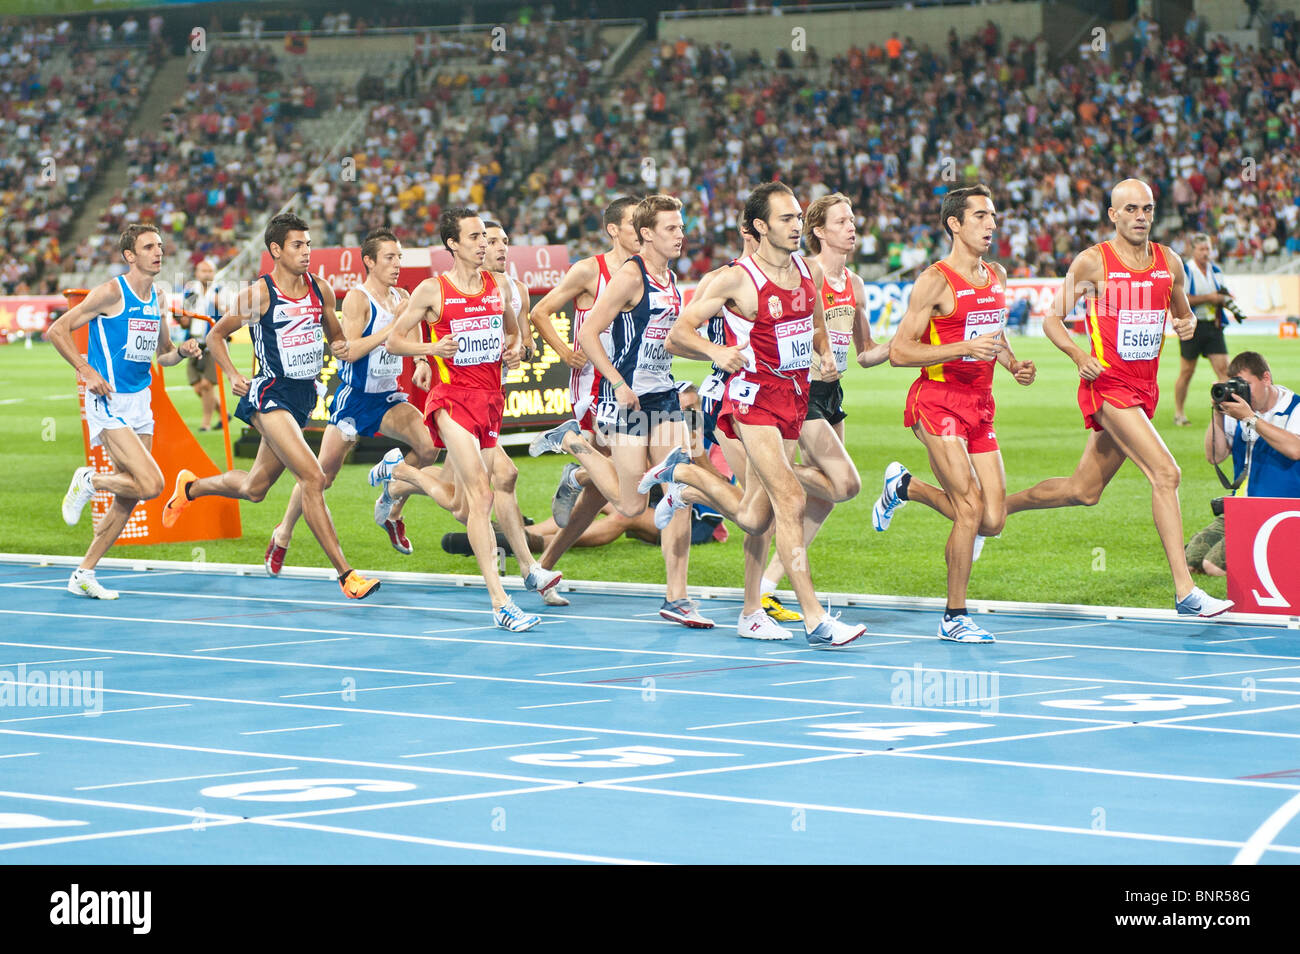 July 30th at the 2010 Barcelona European Athletics Championships Stock Photo